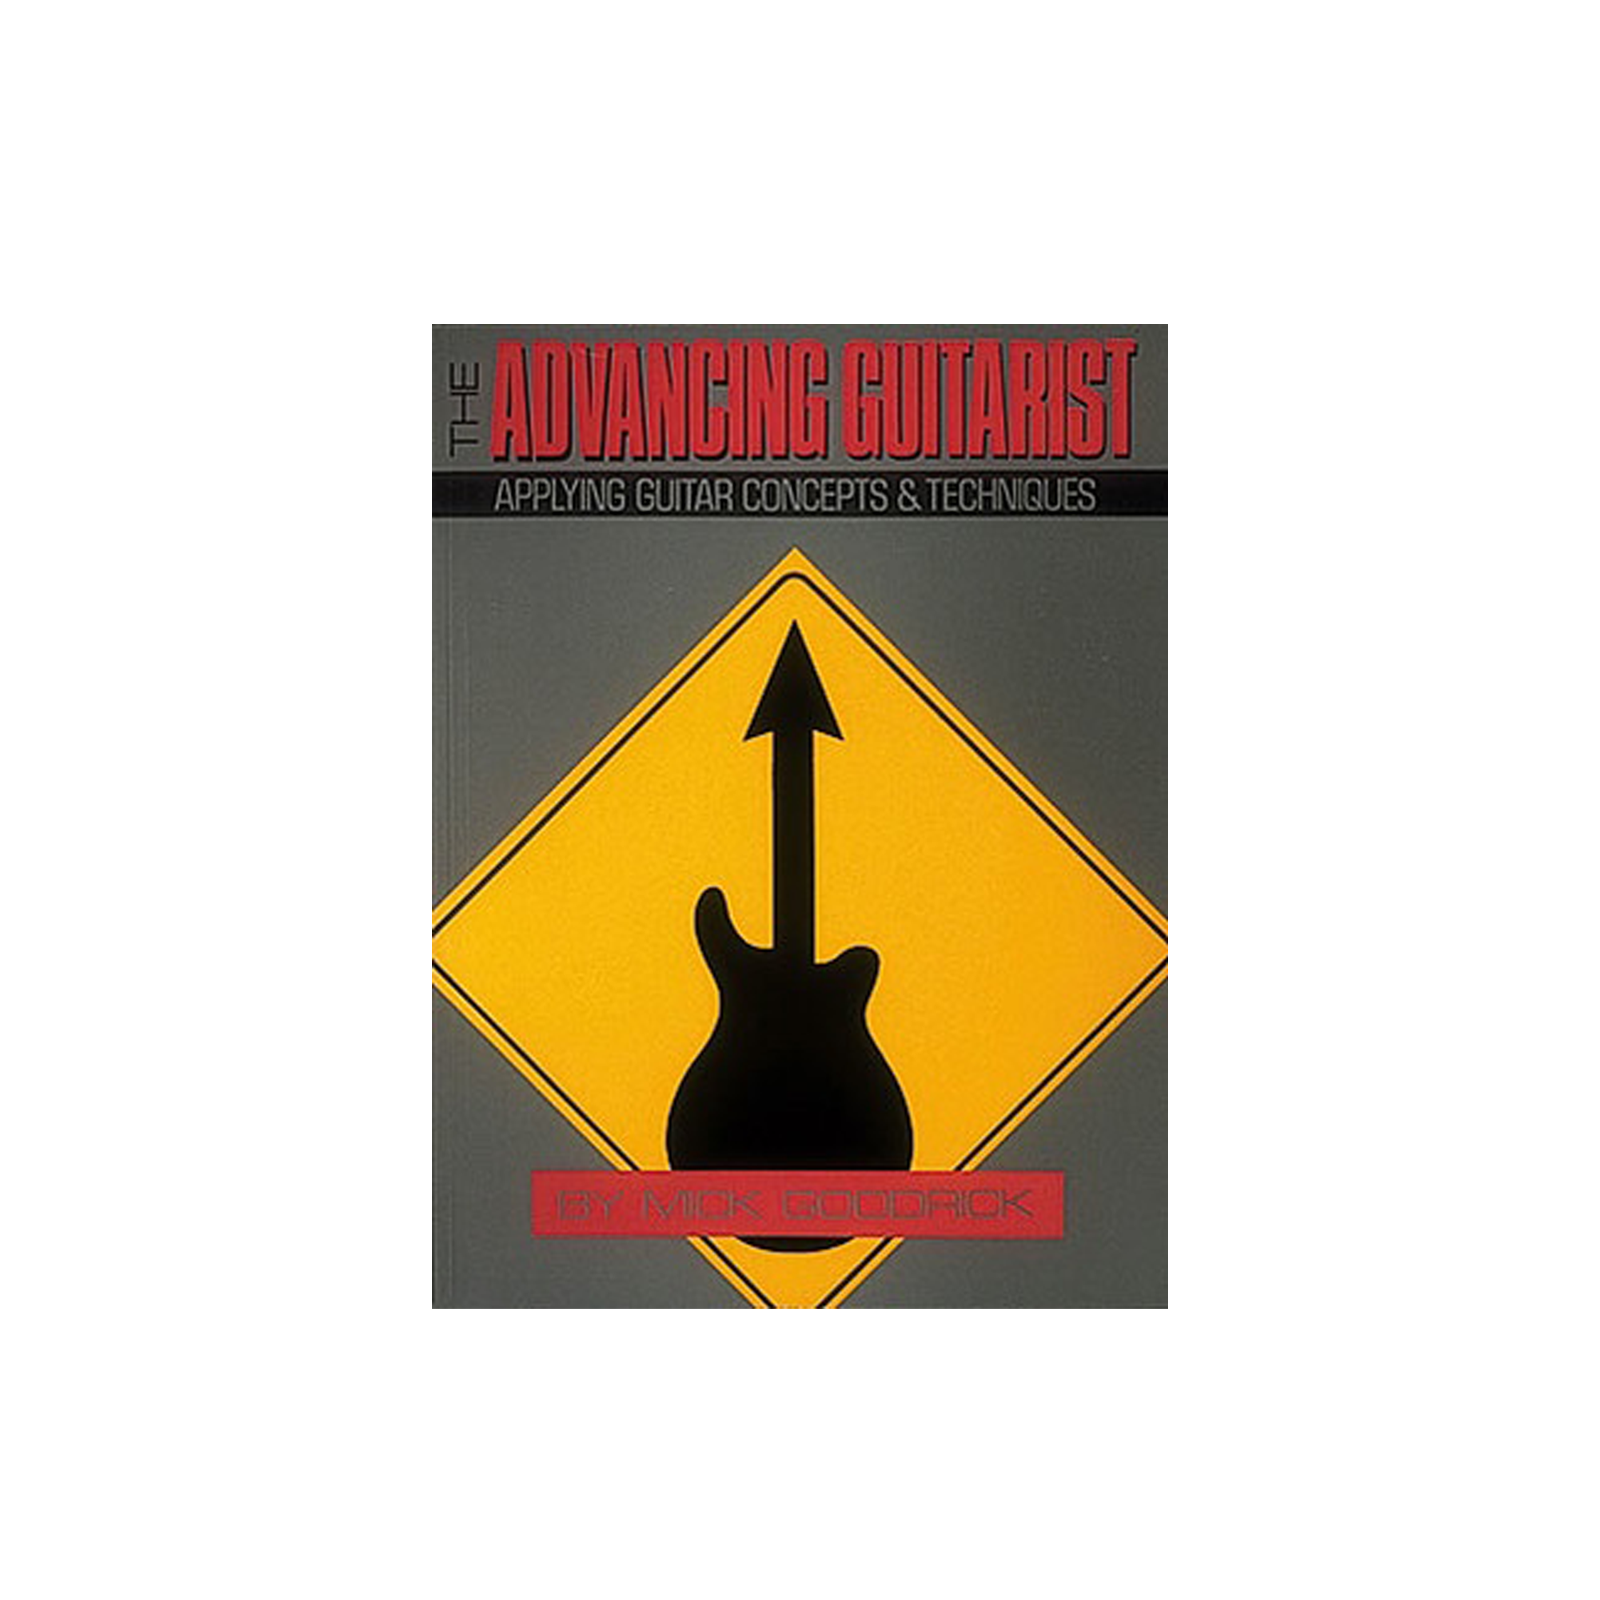 The Advancing Guitarist Book